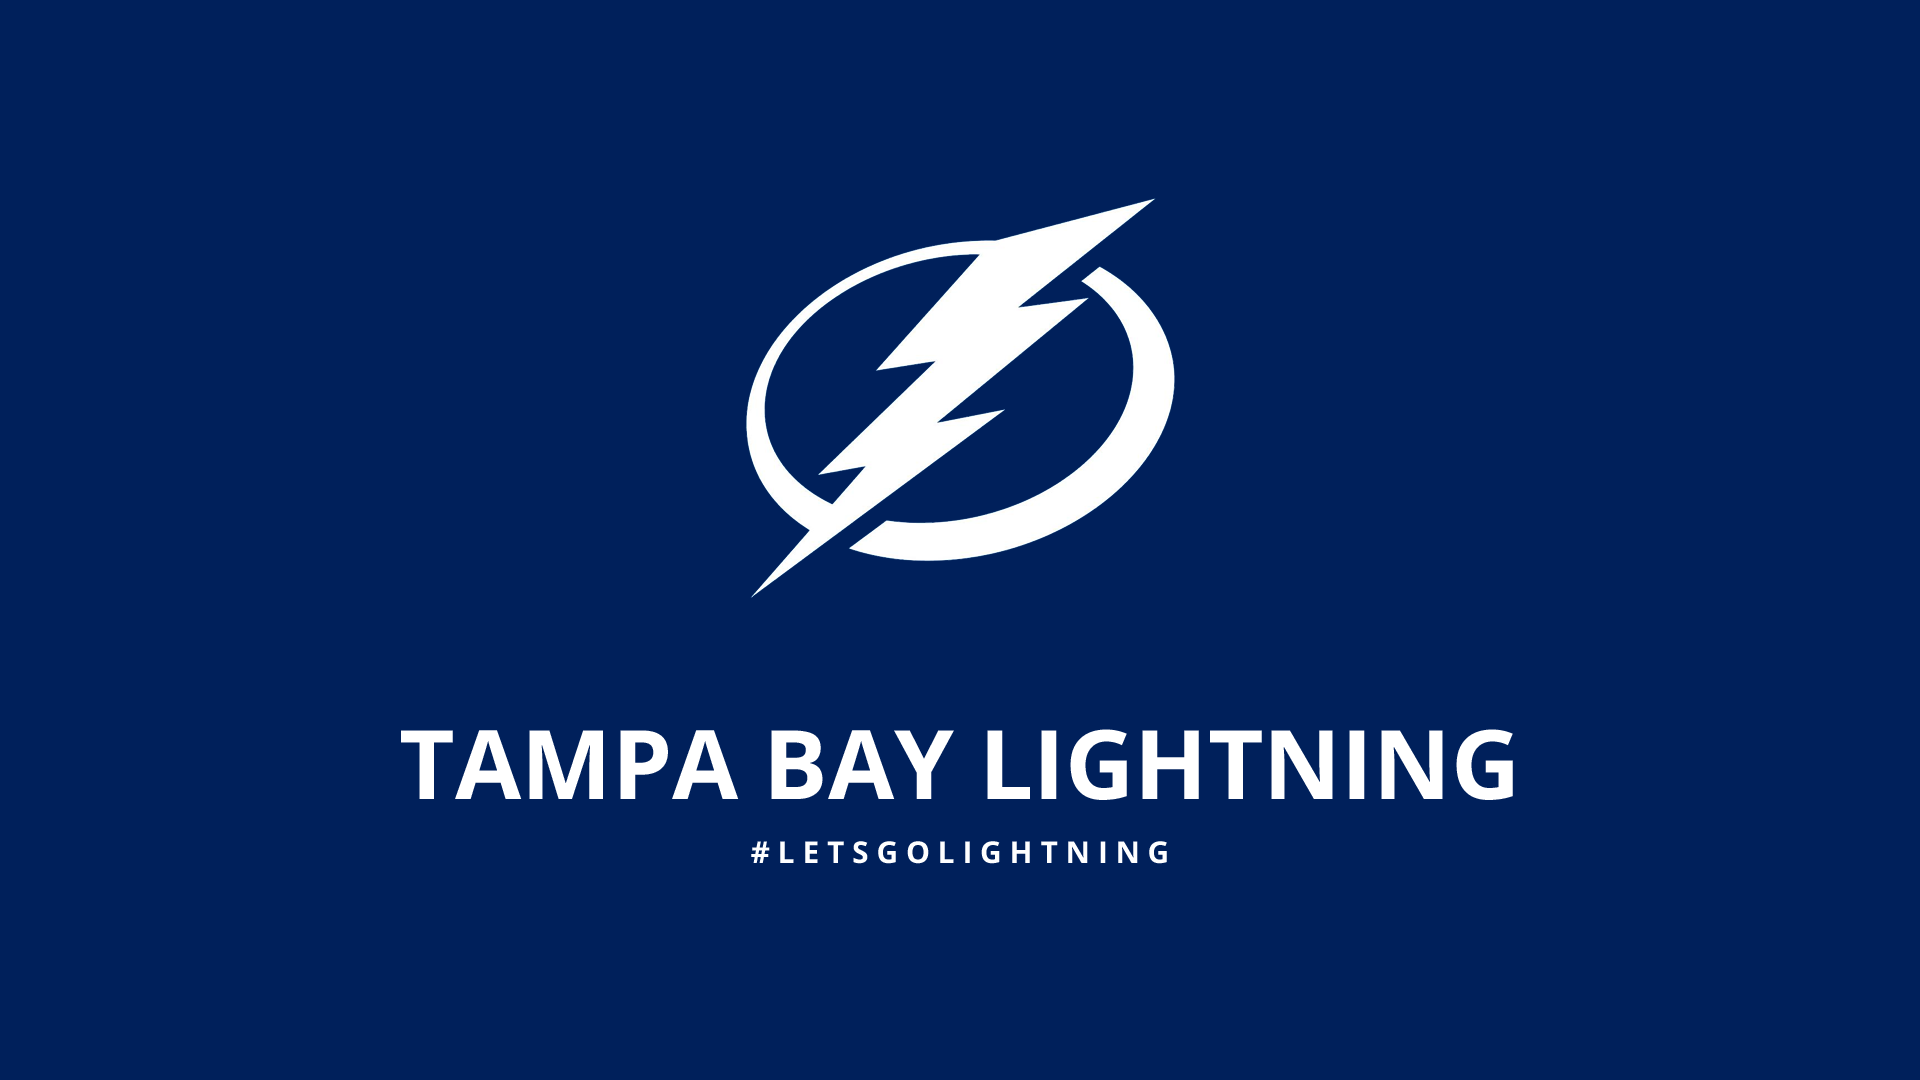 Minimalist Tampa Bay Lightning wallpaper by lfiore on